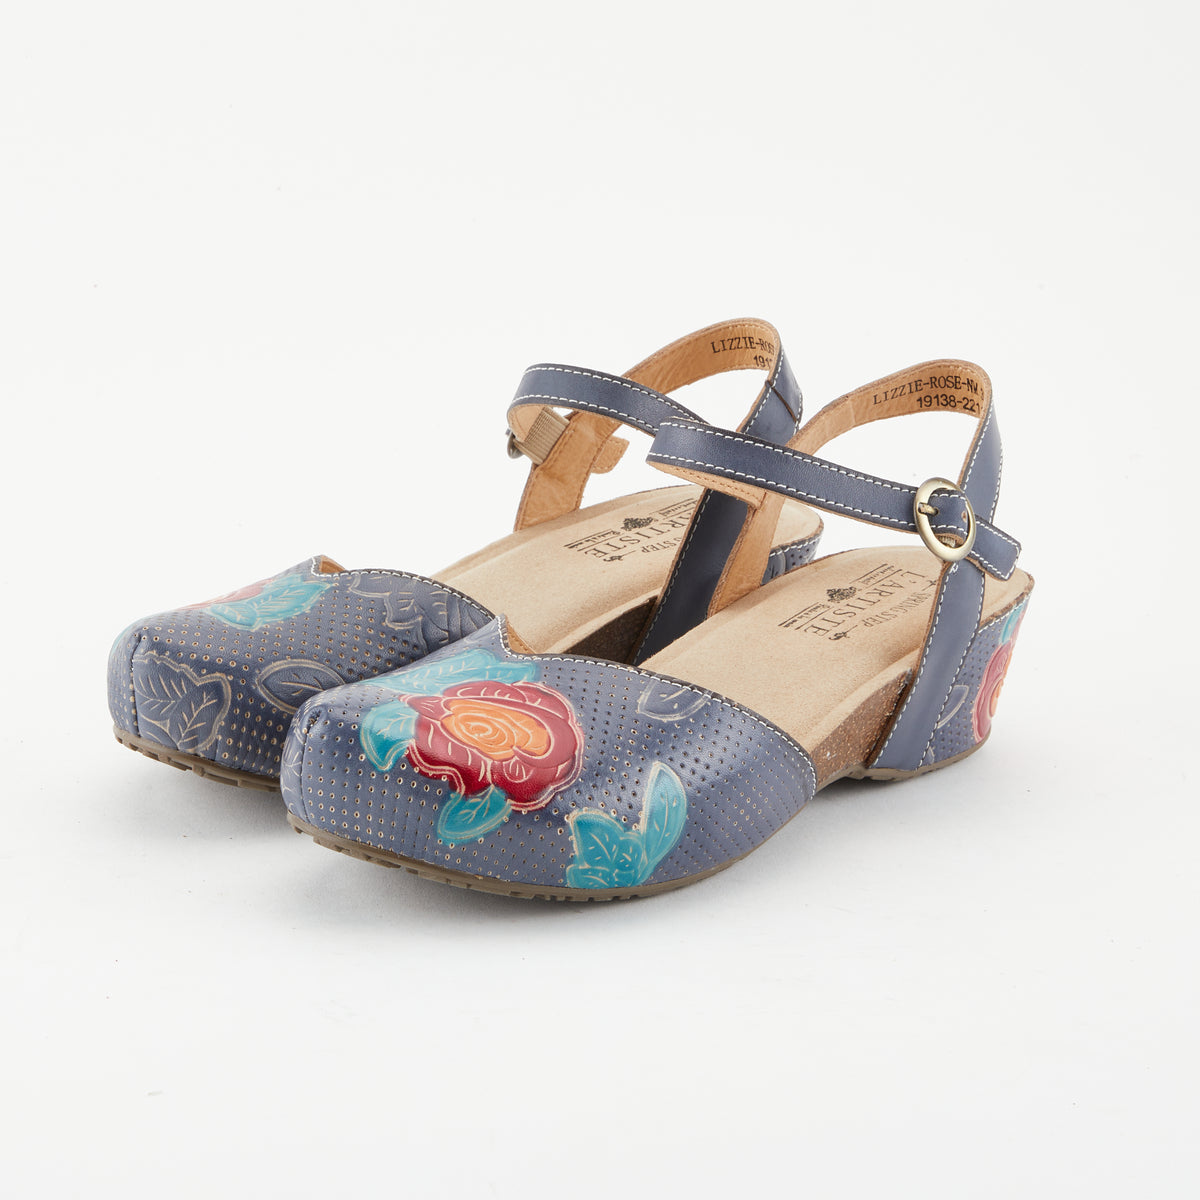 LIZZIE-ROSE SANDAL by L'ARTISTE – Spring Step Shoes